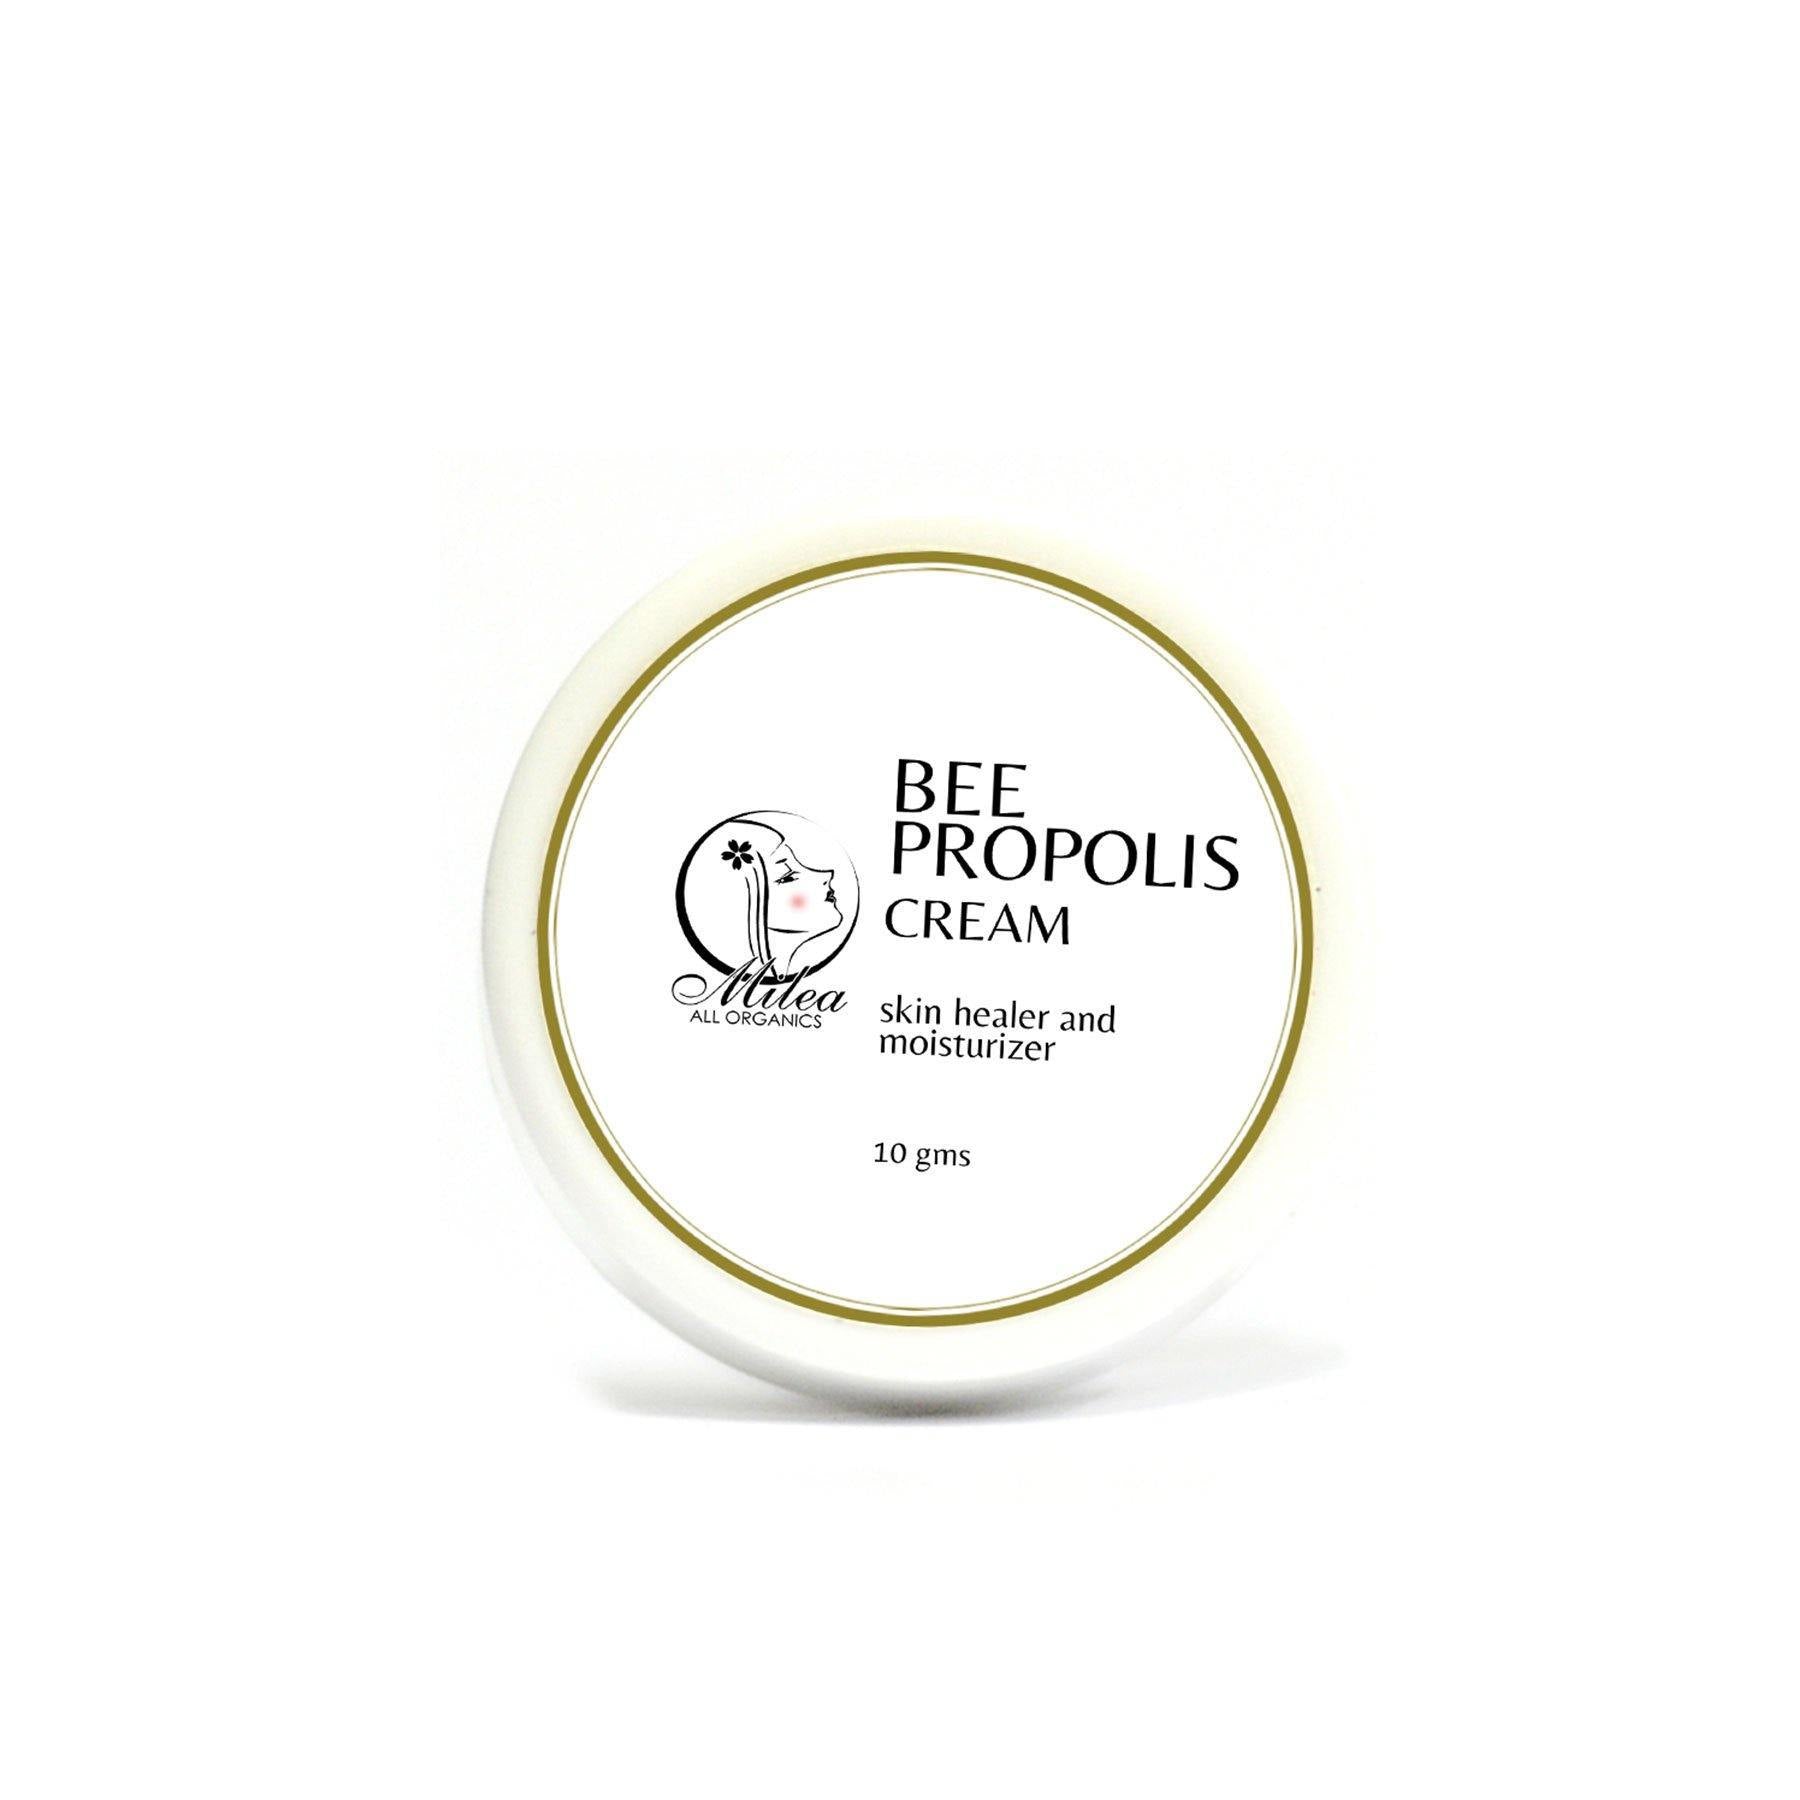 Bee Propolis Cream - Milea All Organics - Philippines